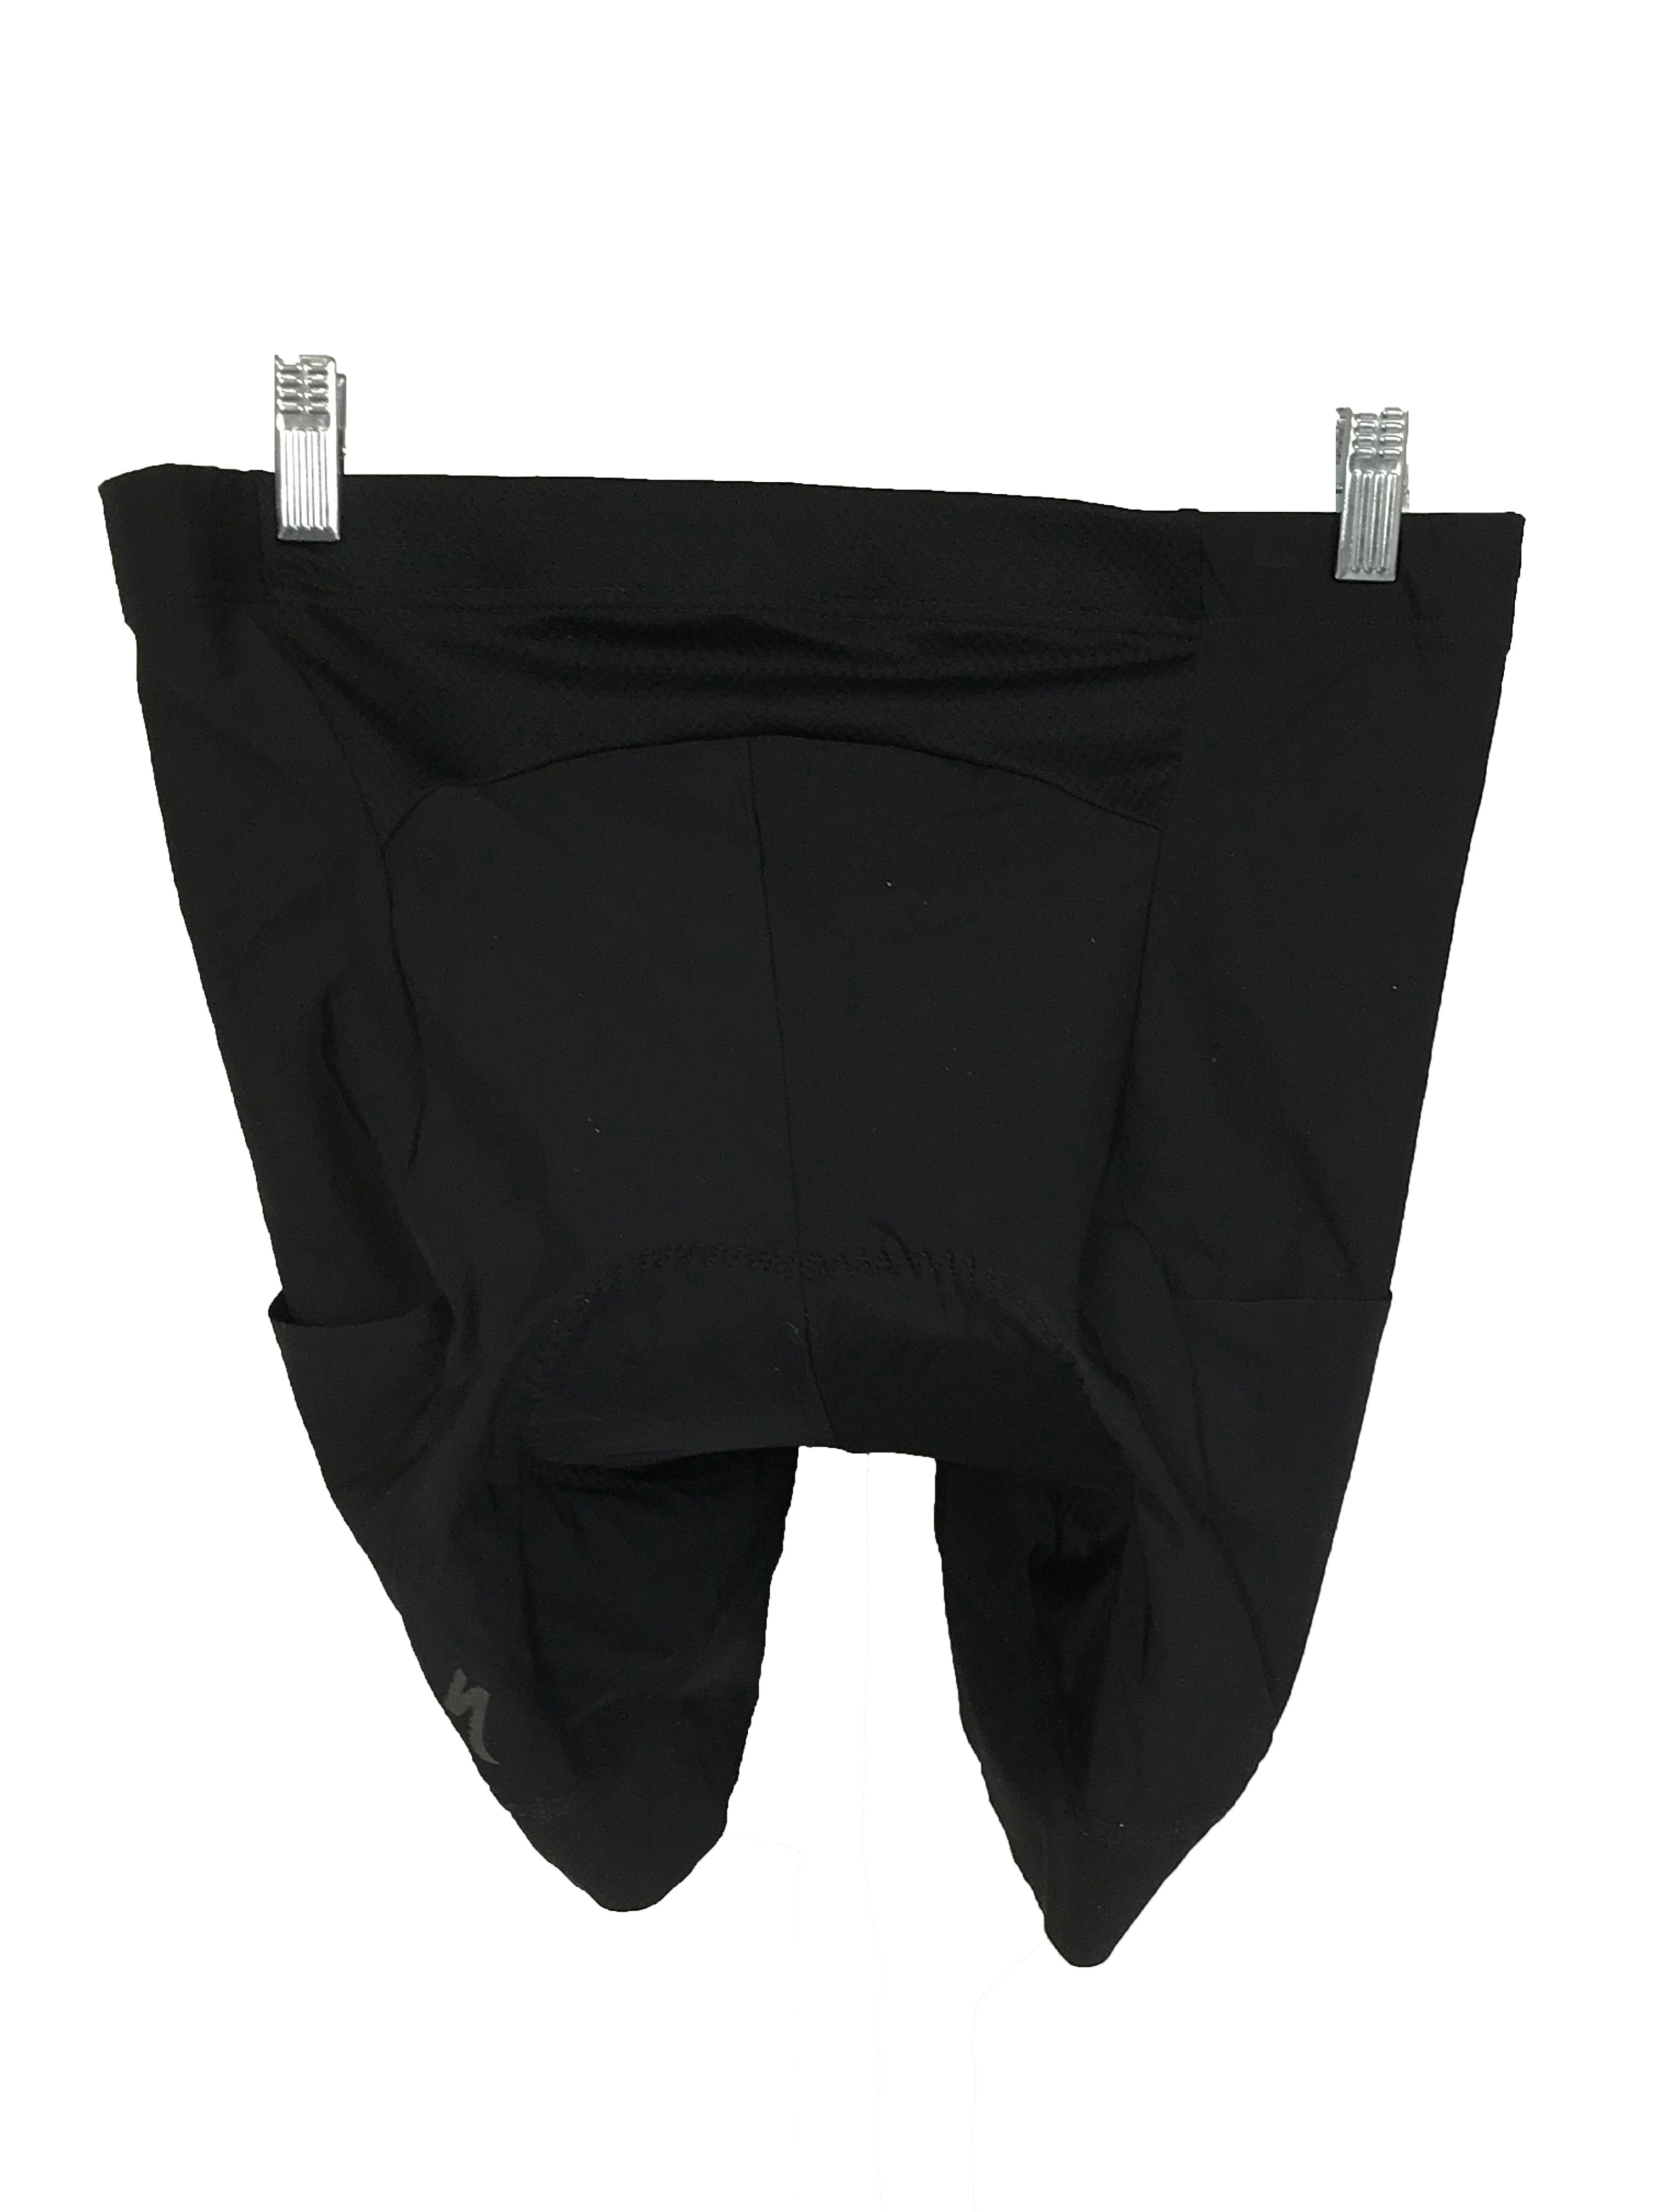 Specialized RBX Shorty Black Shorts with Chamois Women's Size XL NWT